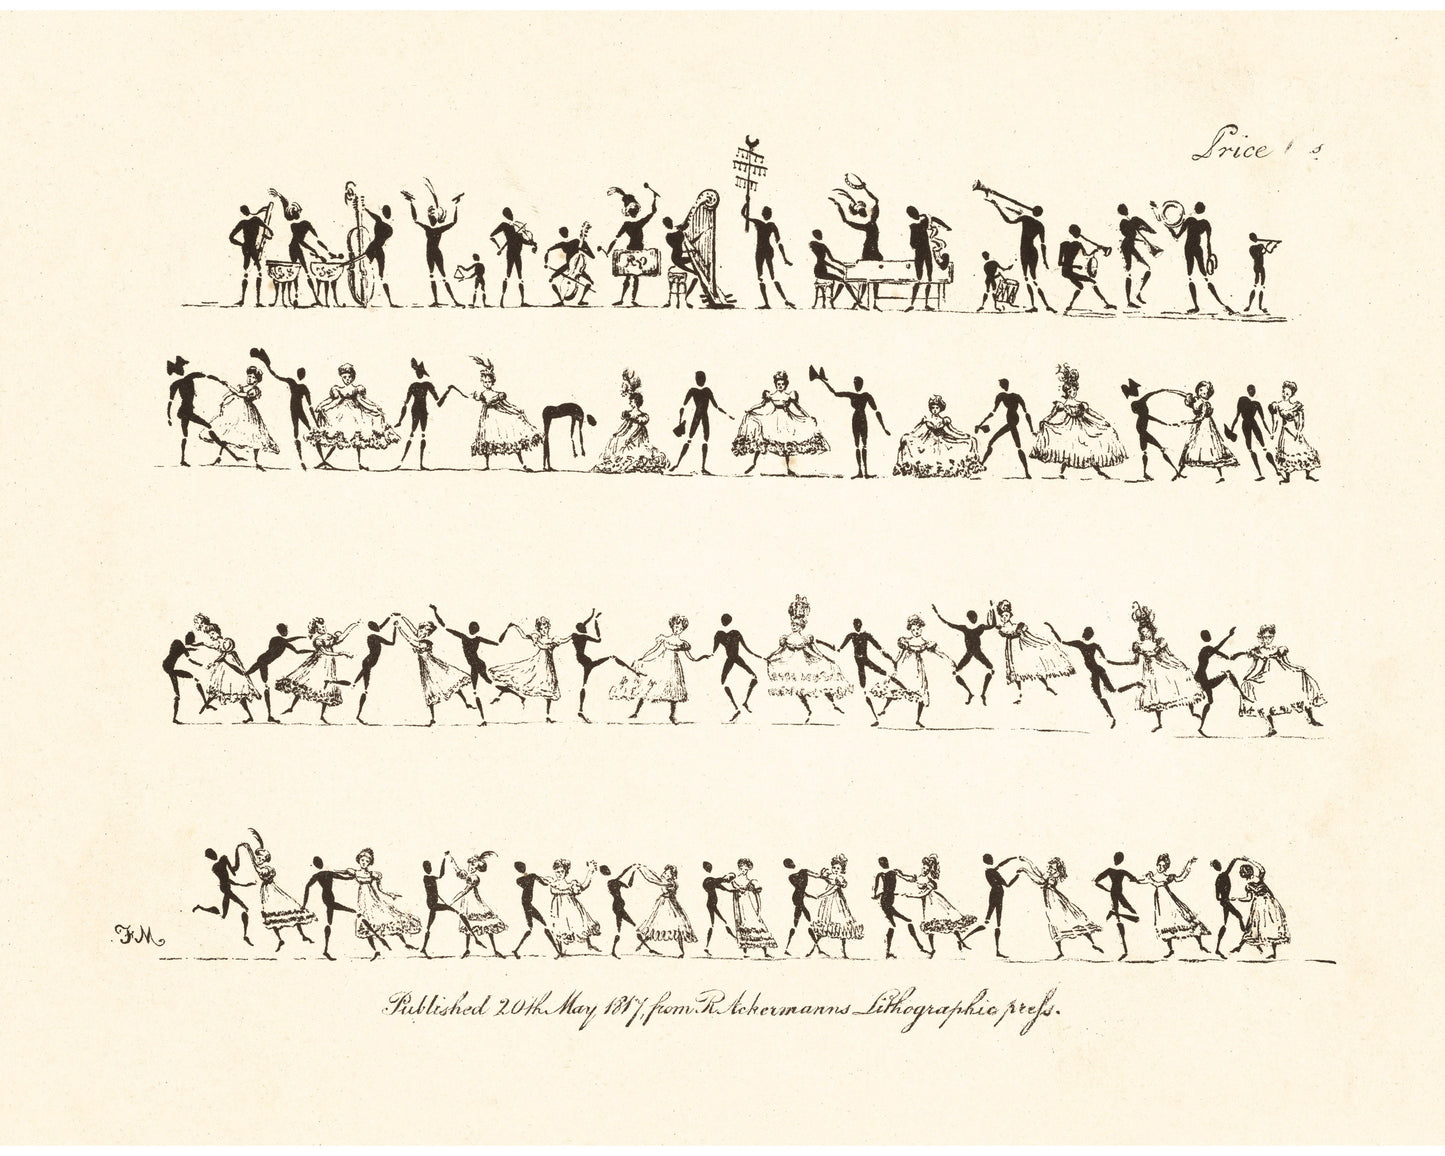 Dance figures art print | Dancing at a ball | Ackerman, 1817 | 19th century fashion | Pride & Prejudice era wall art | Modern Vintage decor